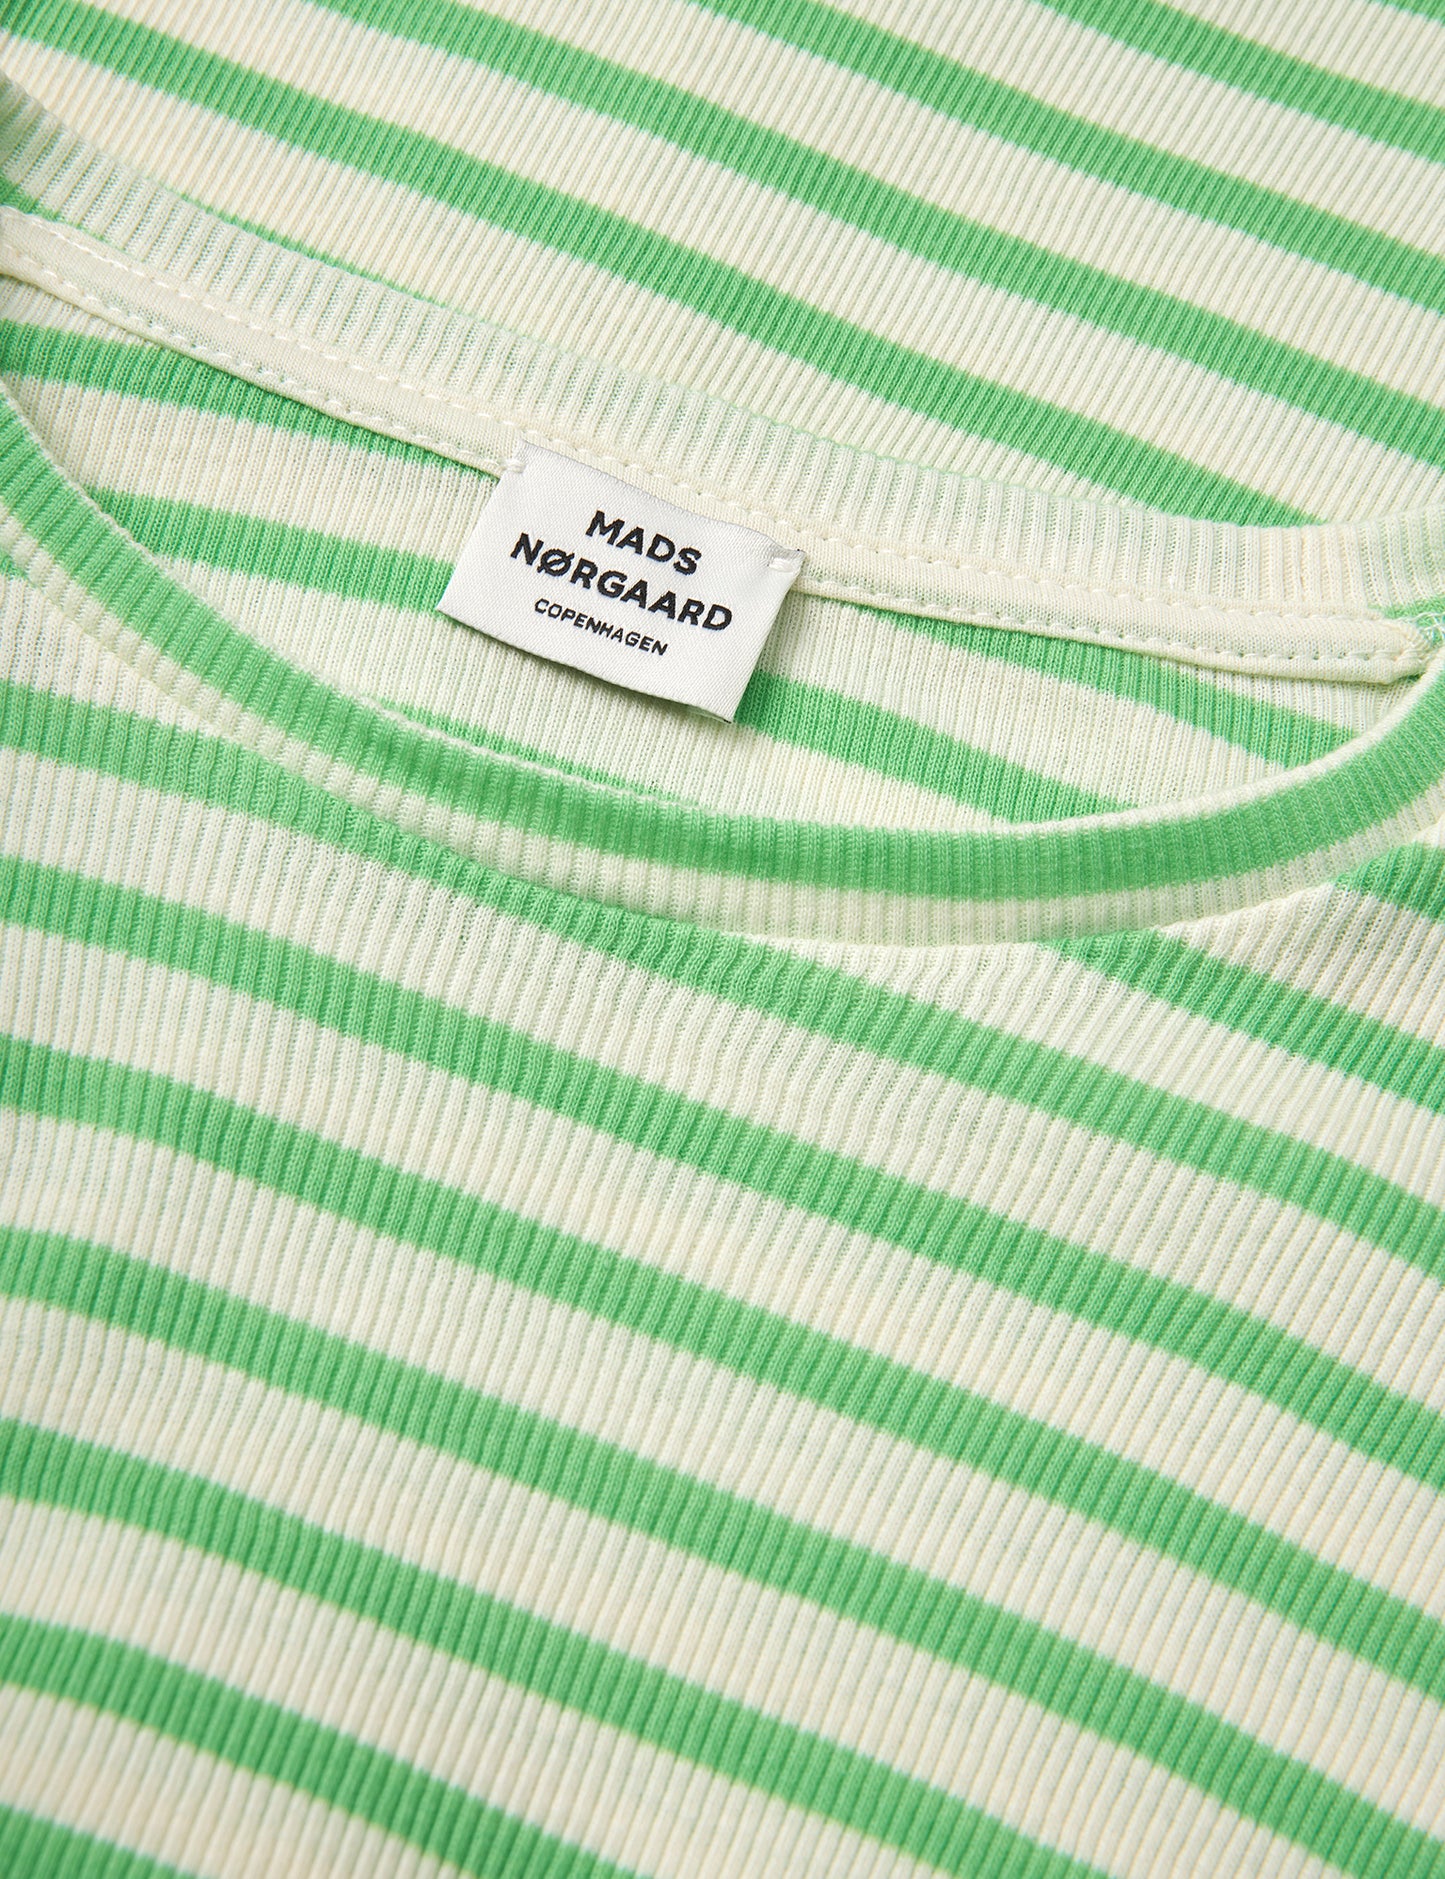 2x2 Cotton Stripe Talino Top, 2x2 Stripe/Poison Green